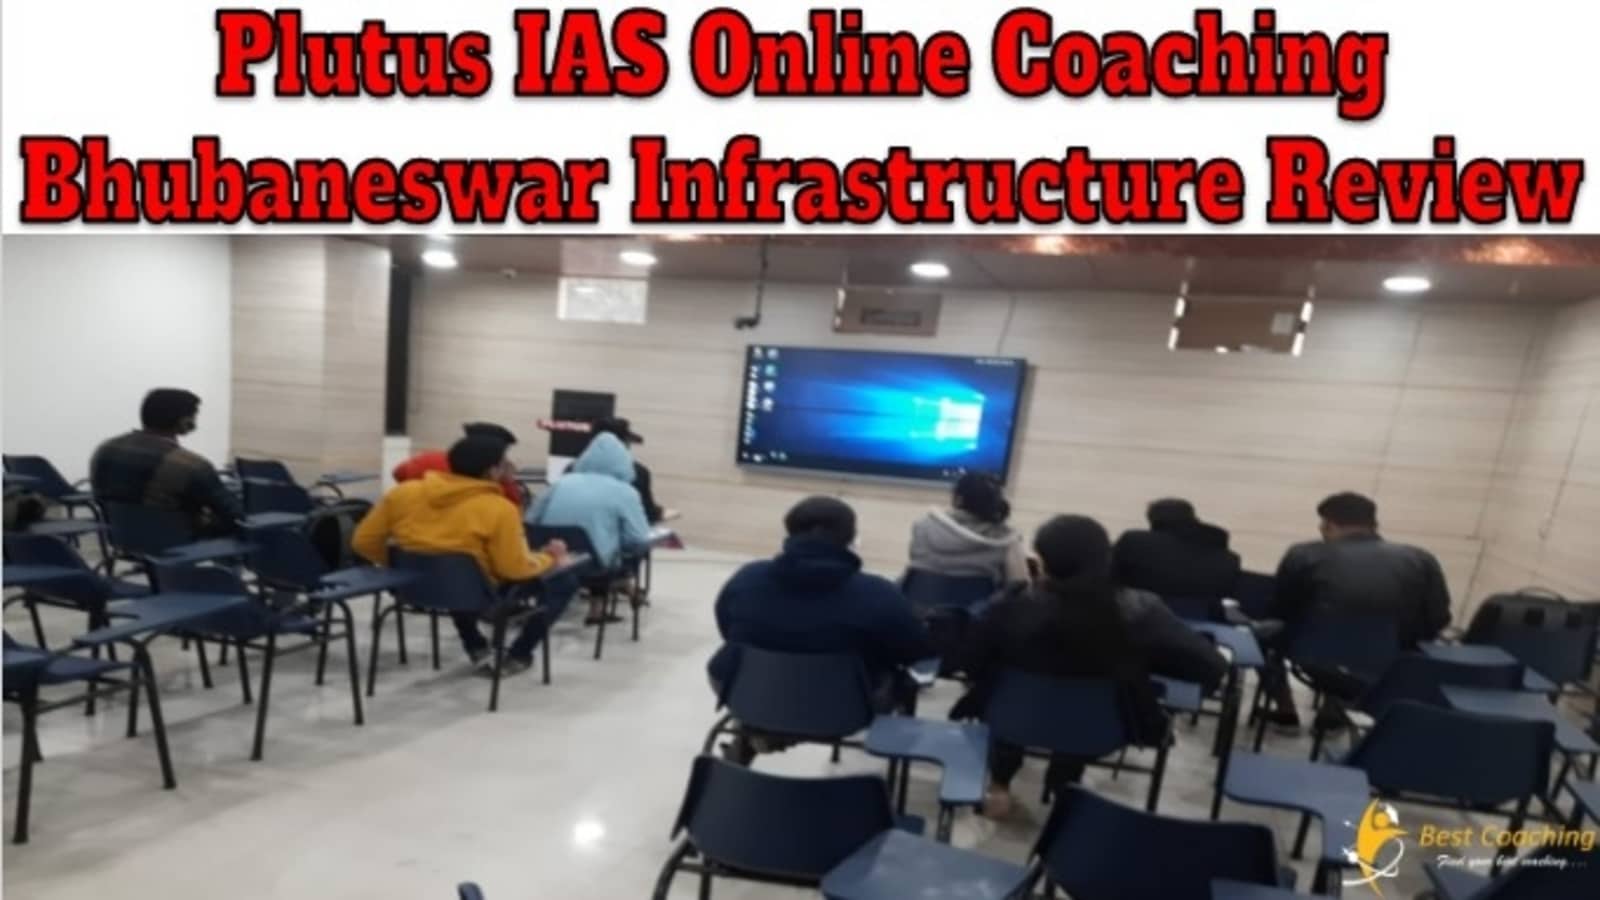 Plutus IAS Online Coaching Bhubaneswar Infrastructure Review